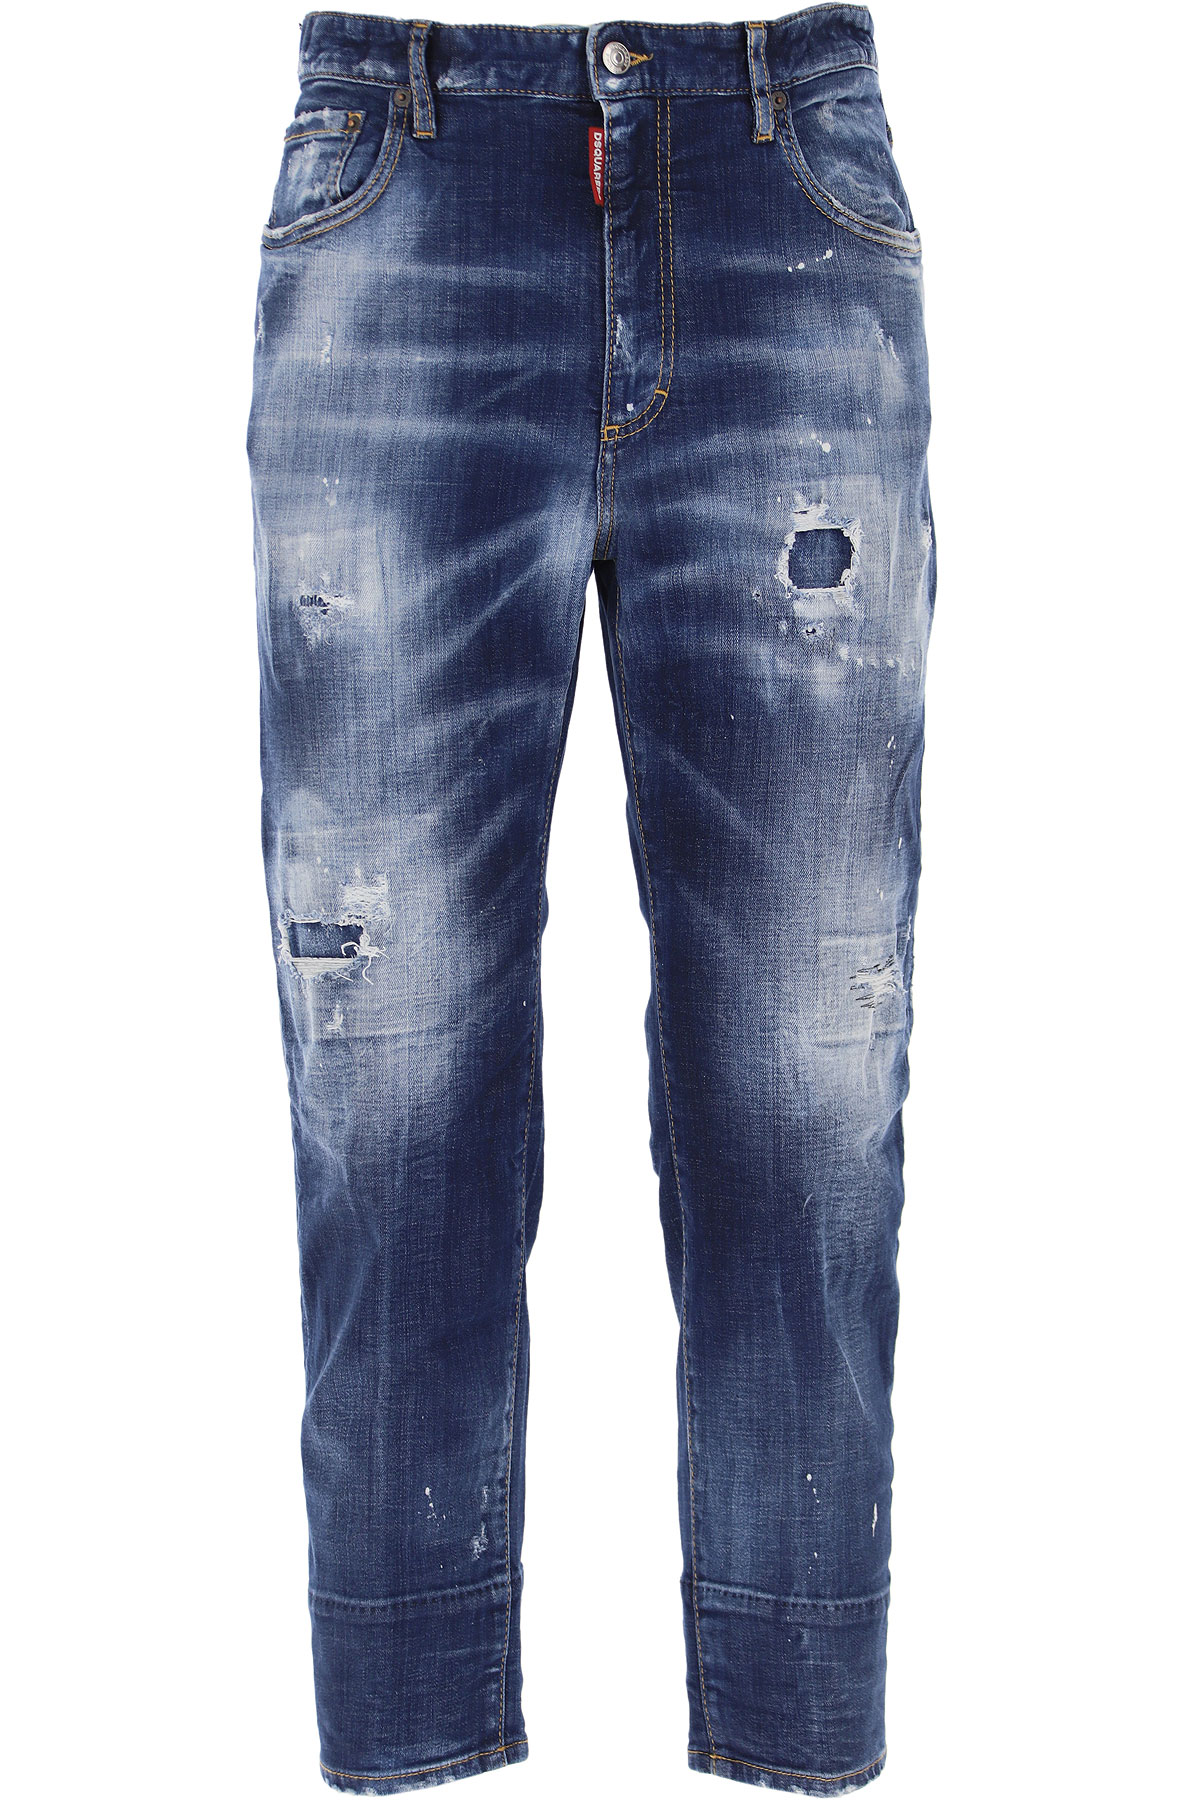 Save 29% DSquared² Denim S74lb0741 S30342 470 Jeans in Blue for Men Mens Jeans DSquared² Jeans 